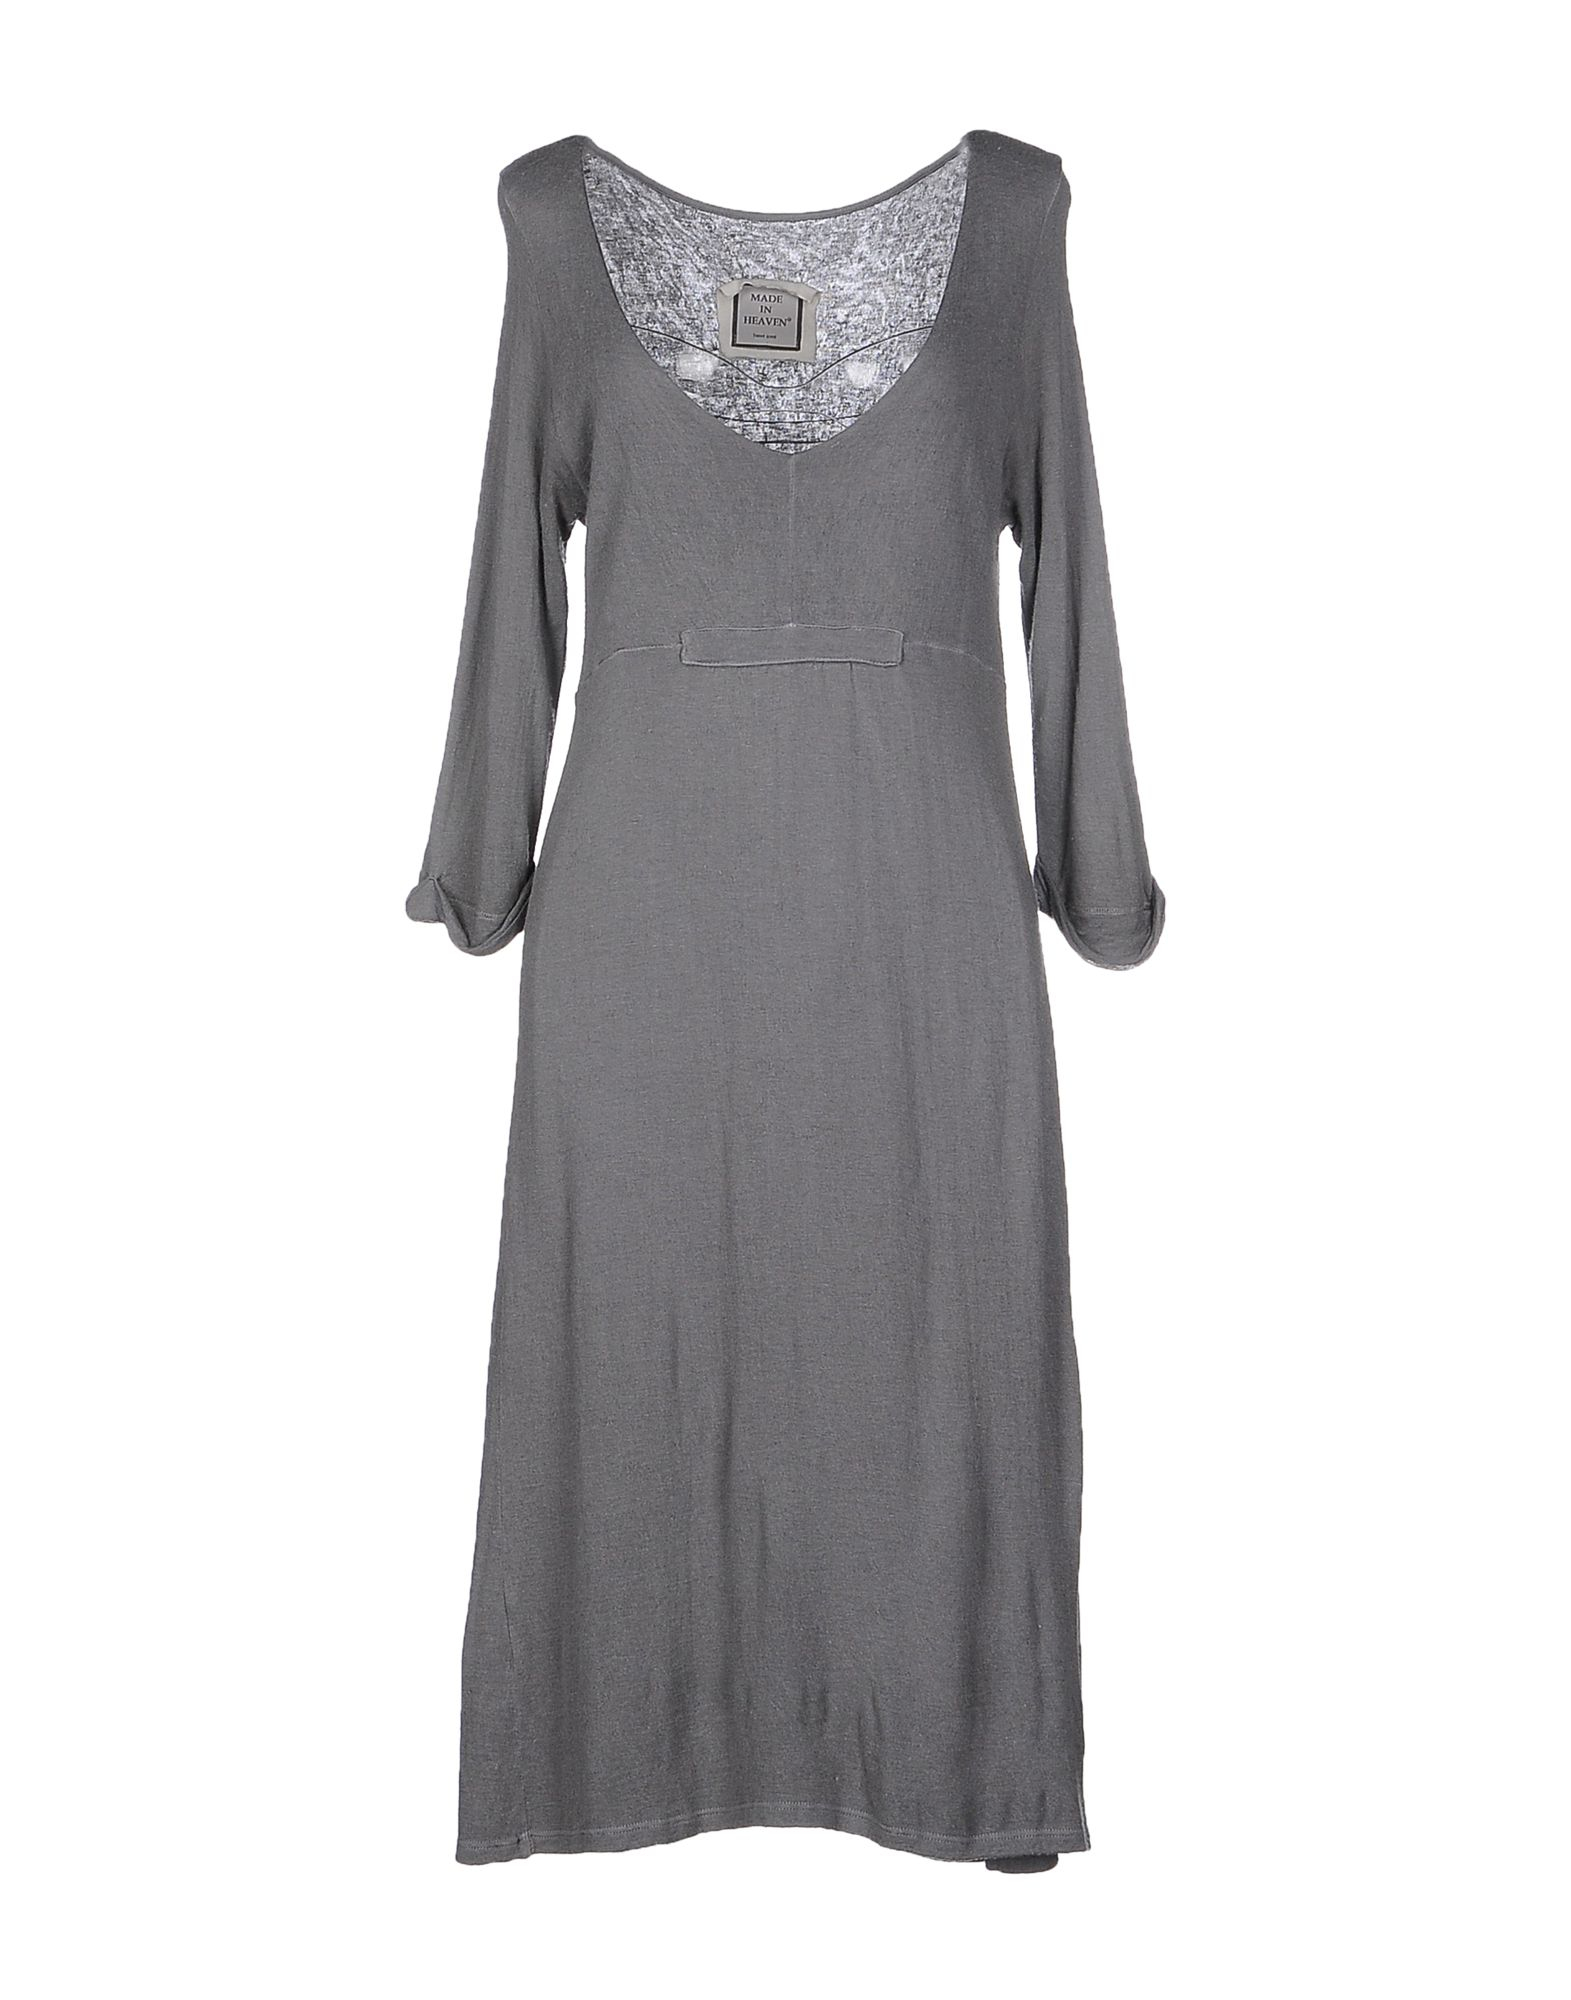 Lyst - Made In Heaven Knee-length Dress in Gray